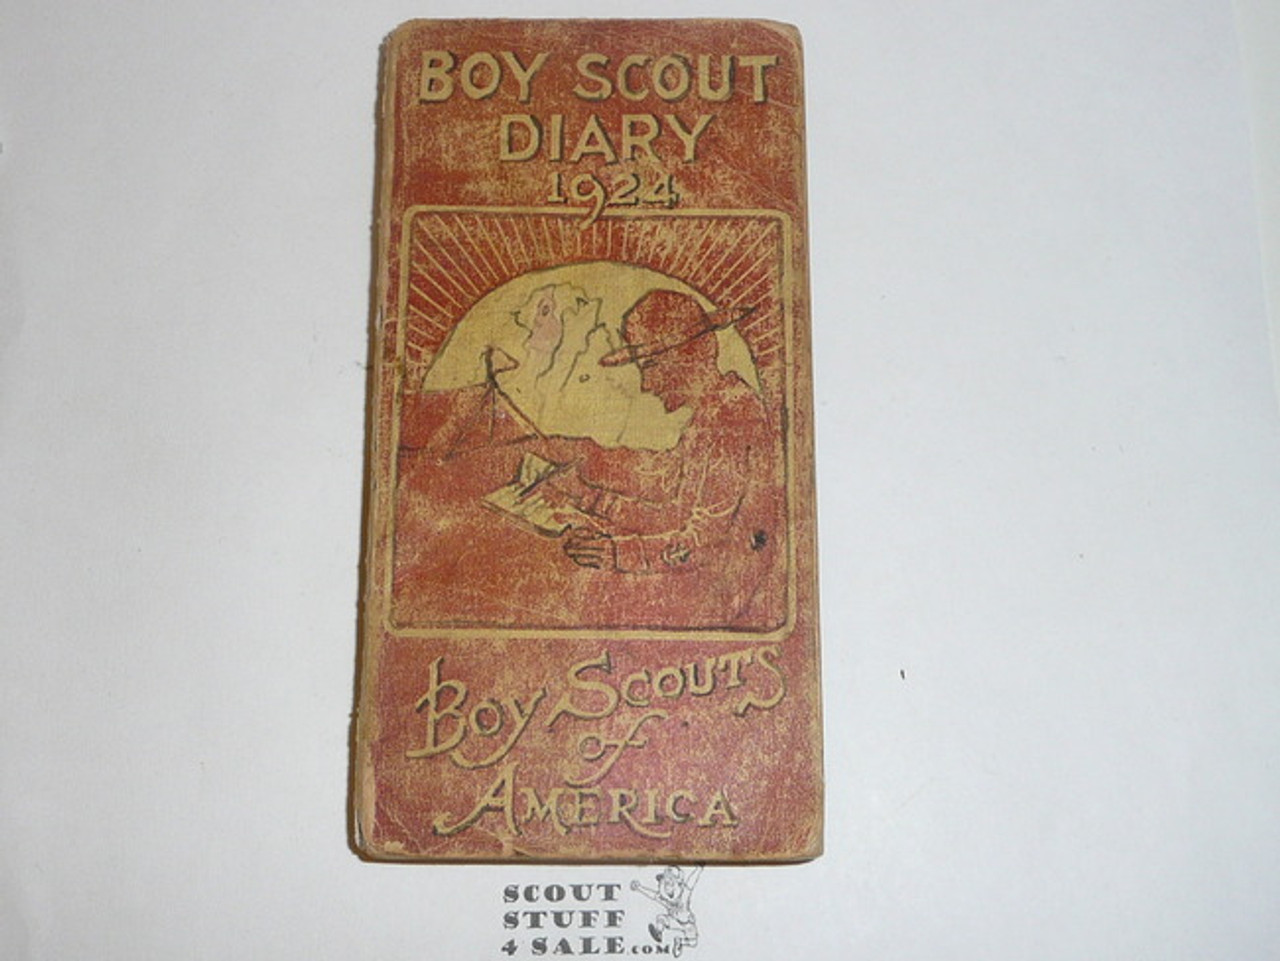 1924 Boy Scout Diary, some wear